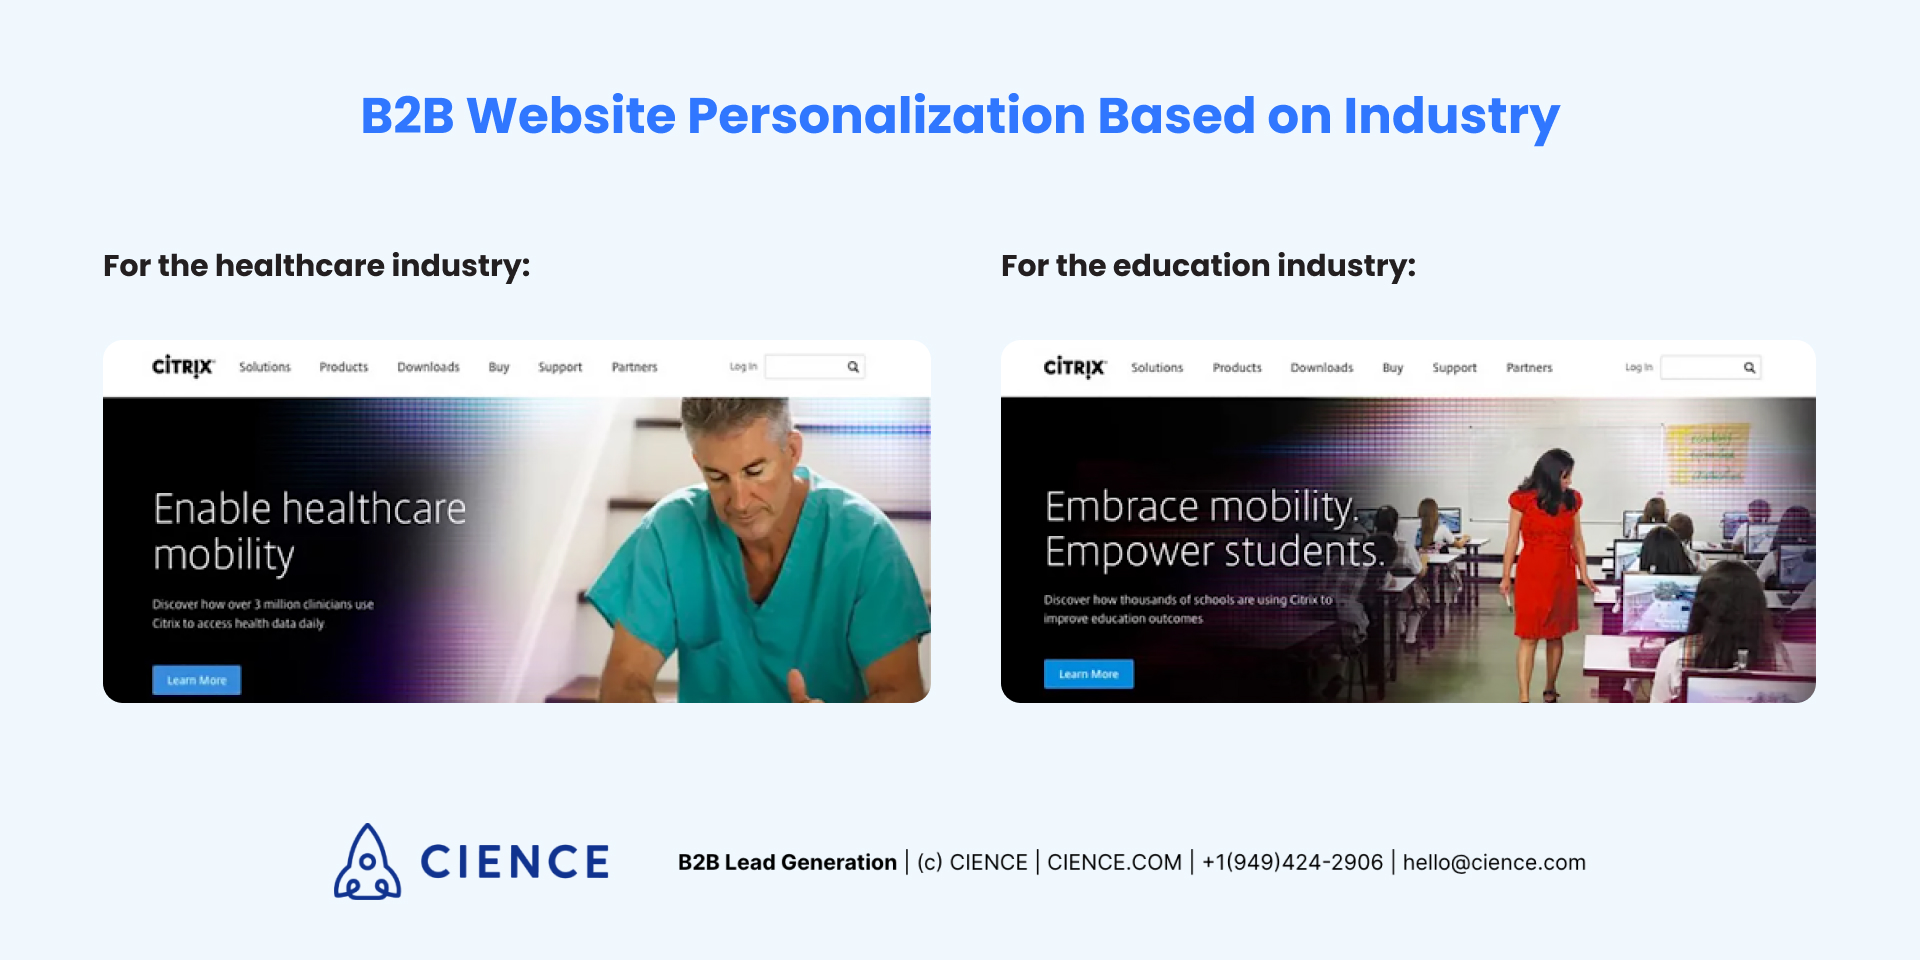 B2B Website Personalization Based on Industry